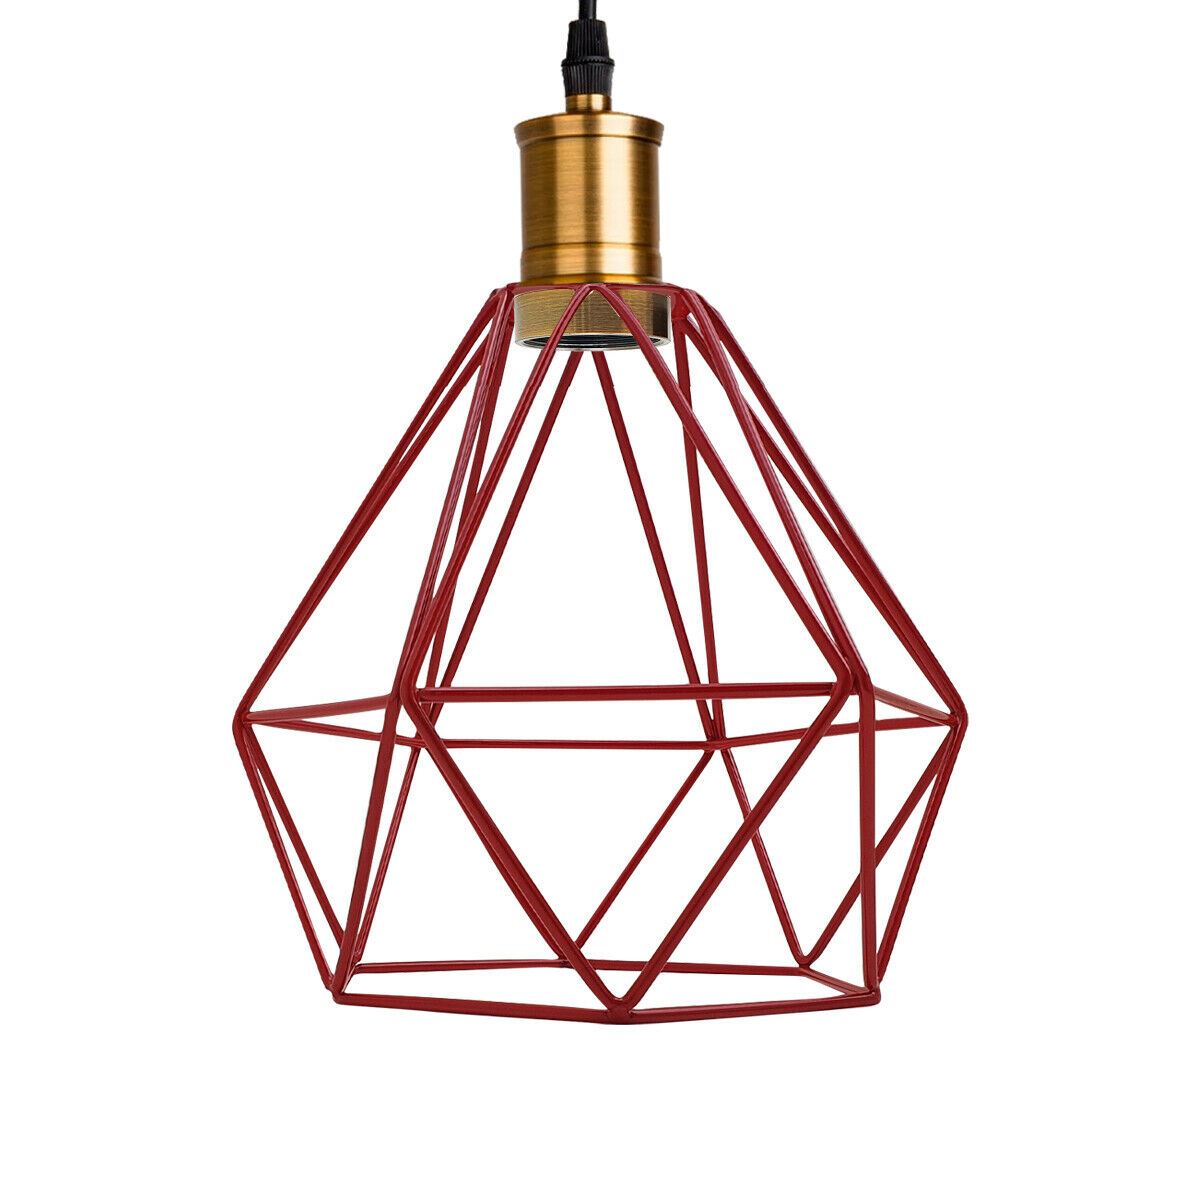 Industrial Retro style 3-Light Pendant lights Adjustable Cord with Diamond Metal Cages~1255 - LEDSone UK Ltd